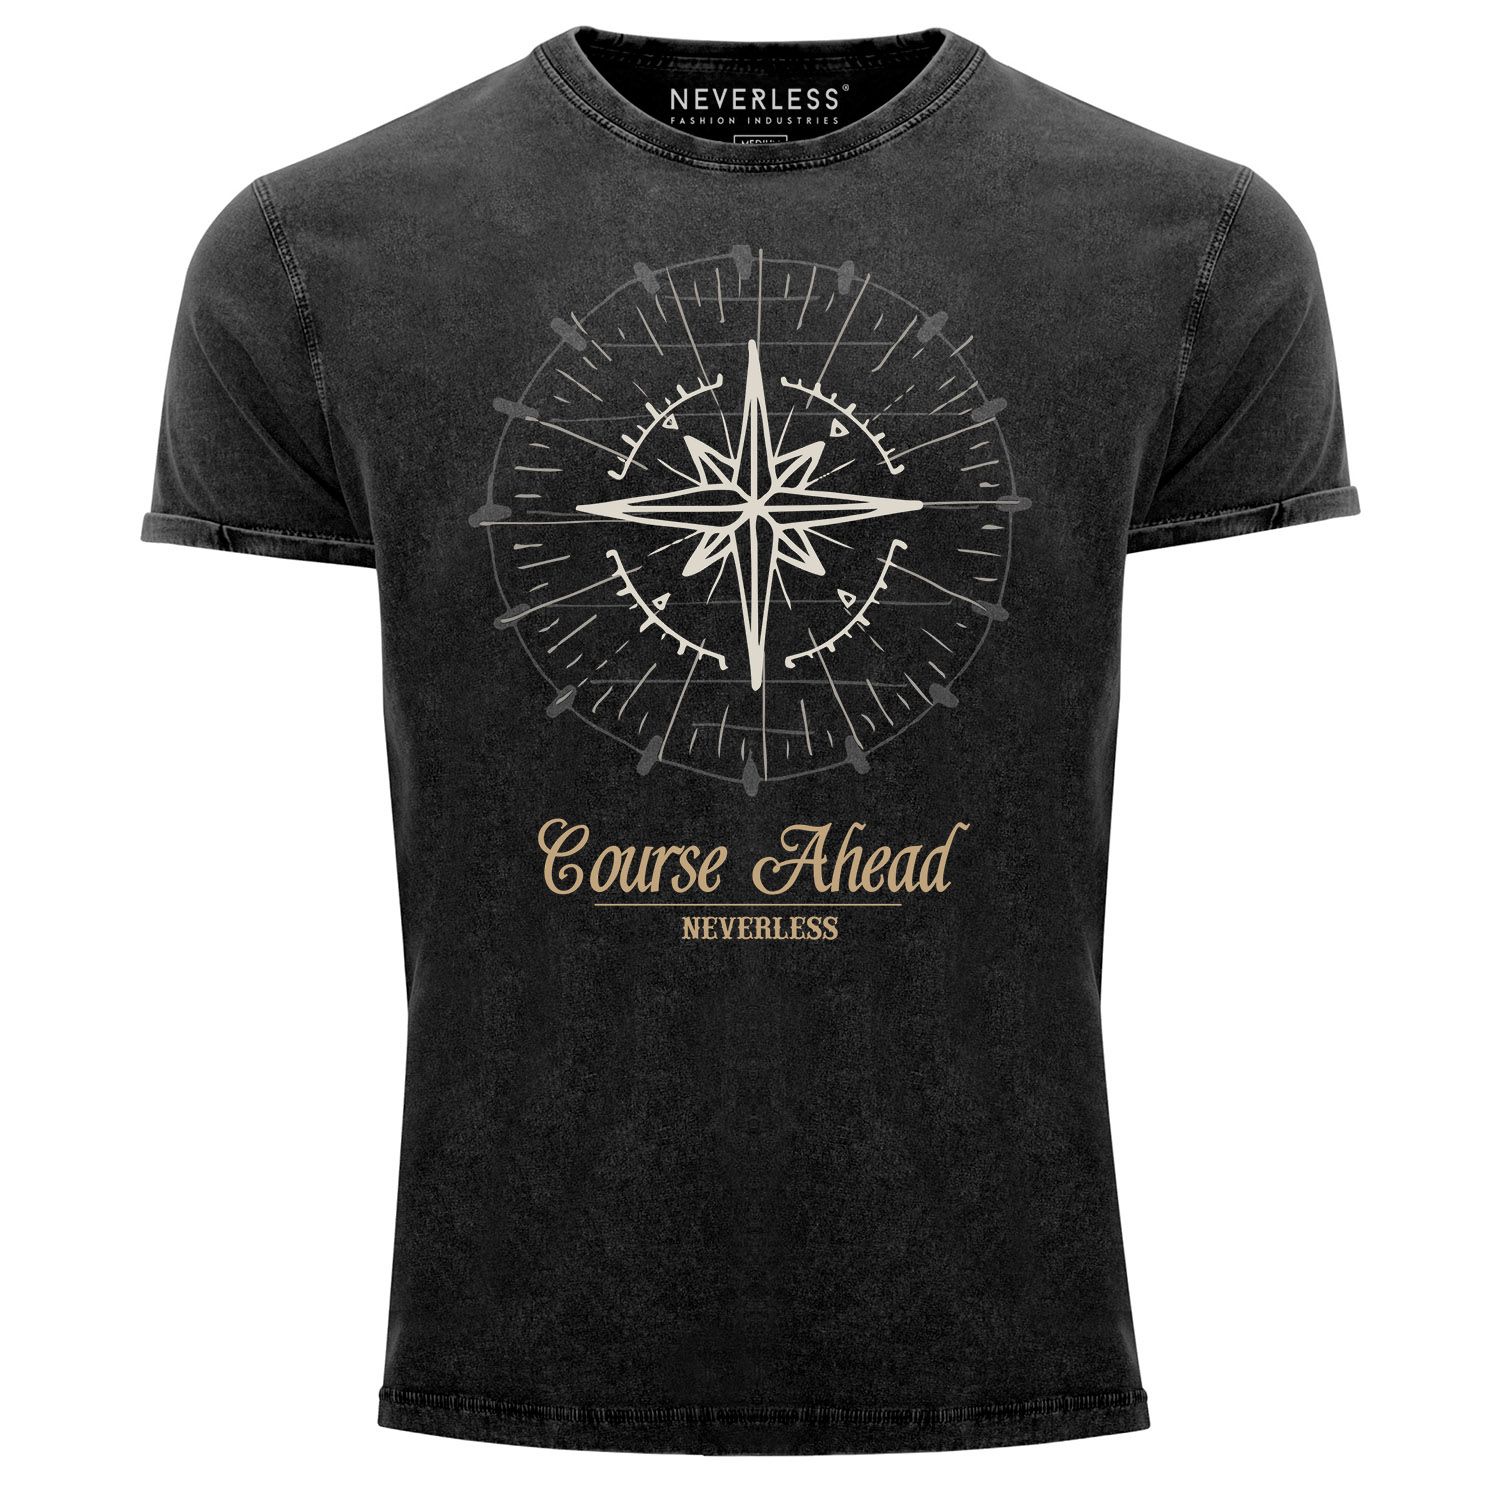 Cooles angesagtes Herren T-Shirt Vintage Shirt Kompass Windrose Aufdruck Used Look Slim Fit Neverless®